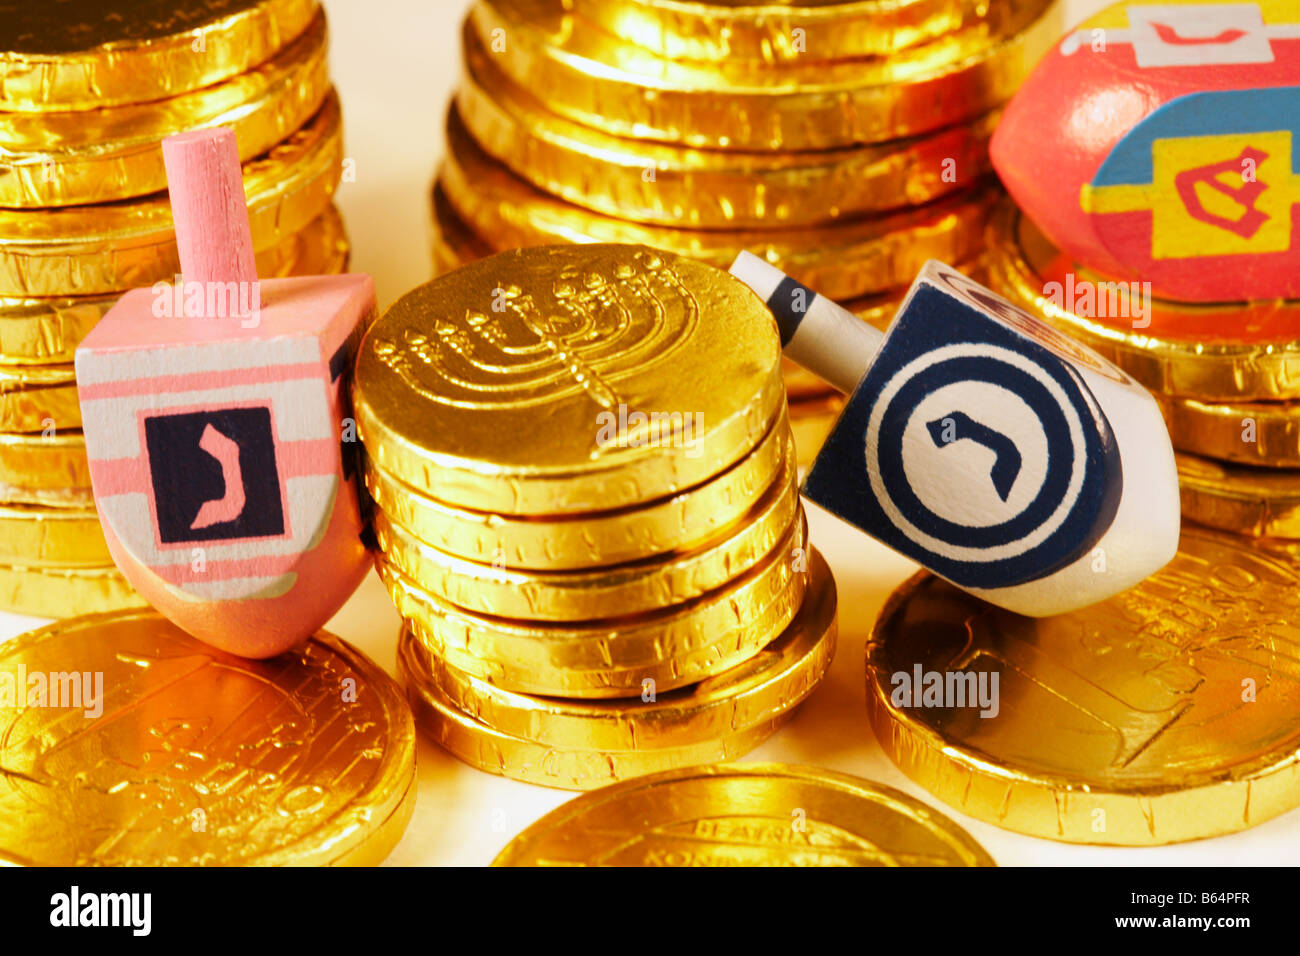 https://c8.alamy.com/comp/B64PFR/jewish-dreidel-dreydles-with-hanukkah-chanukah-chocolate-gold-coins-B64PFR.jpg